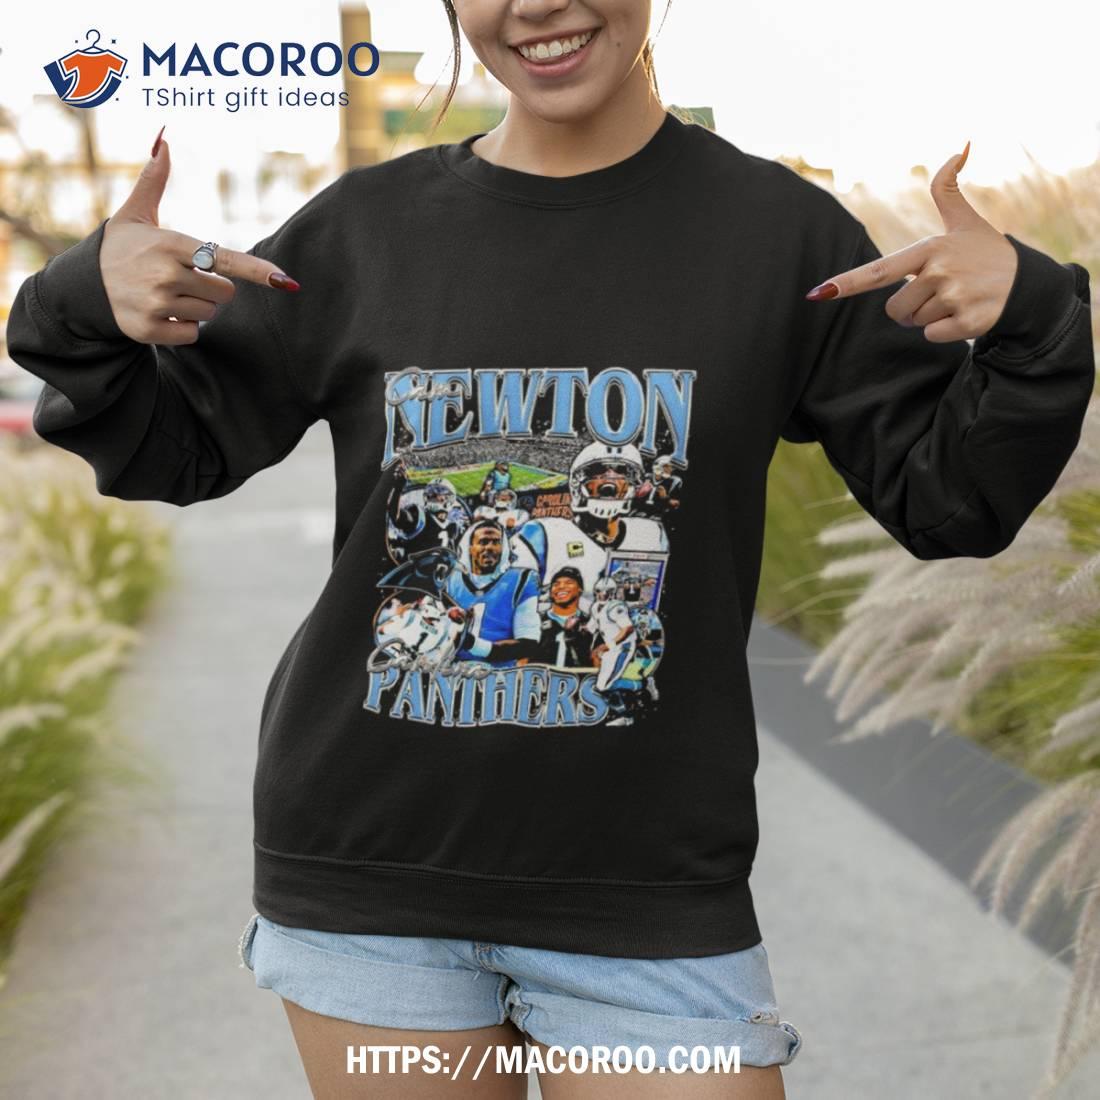 Carolina Football Crewneck Panthers Sweatshirt Vintage 